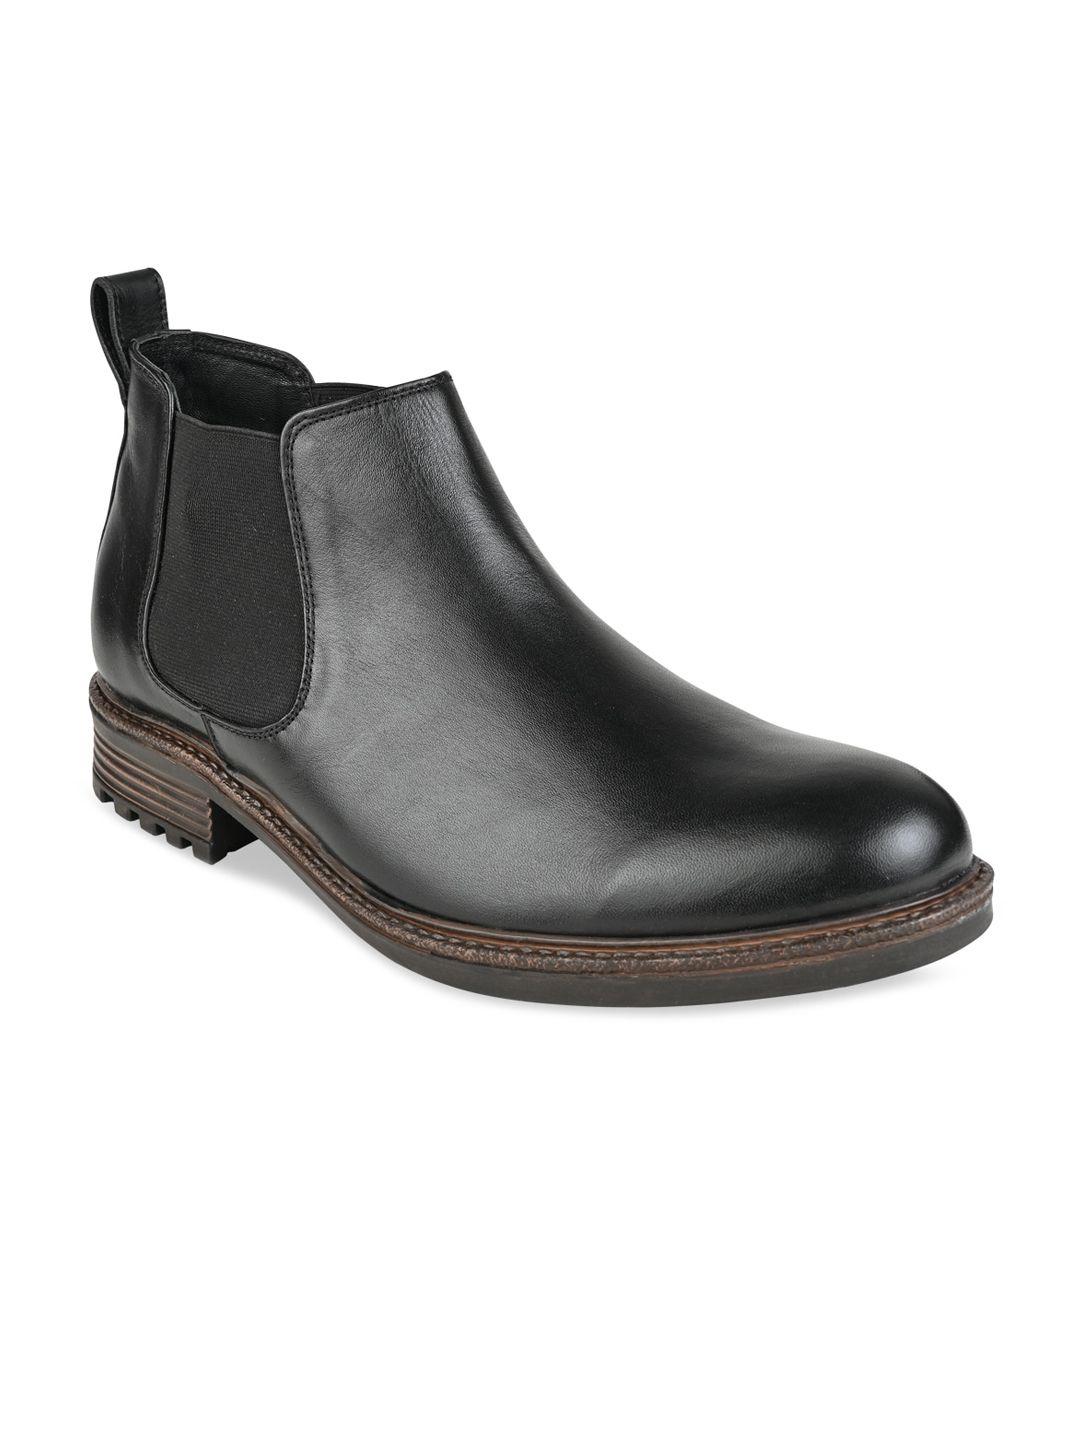 regal-men-black-solid-leather-boots